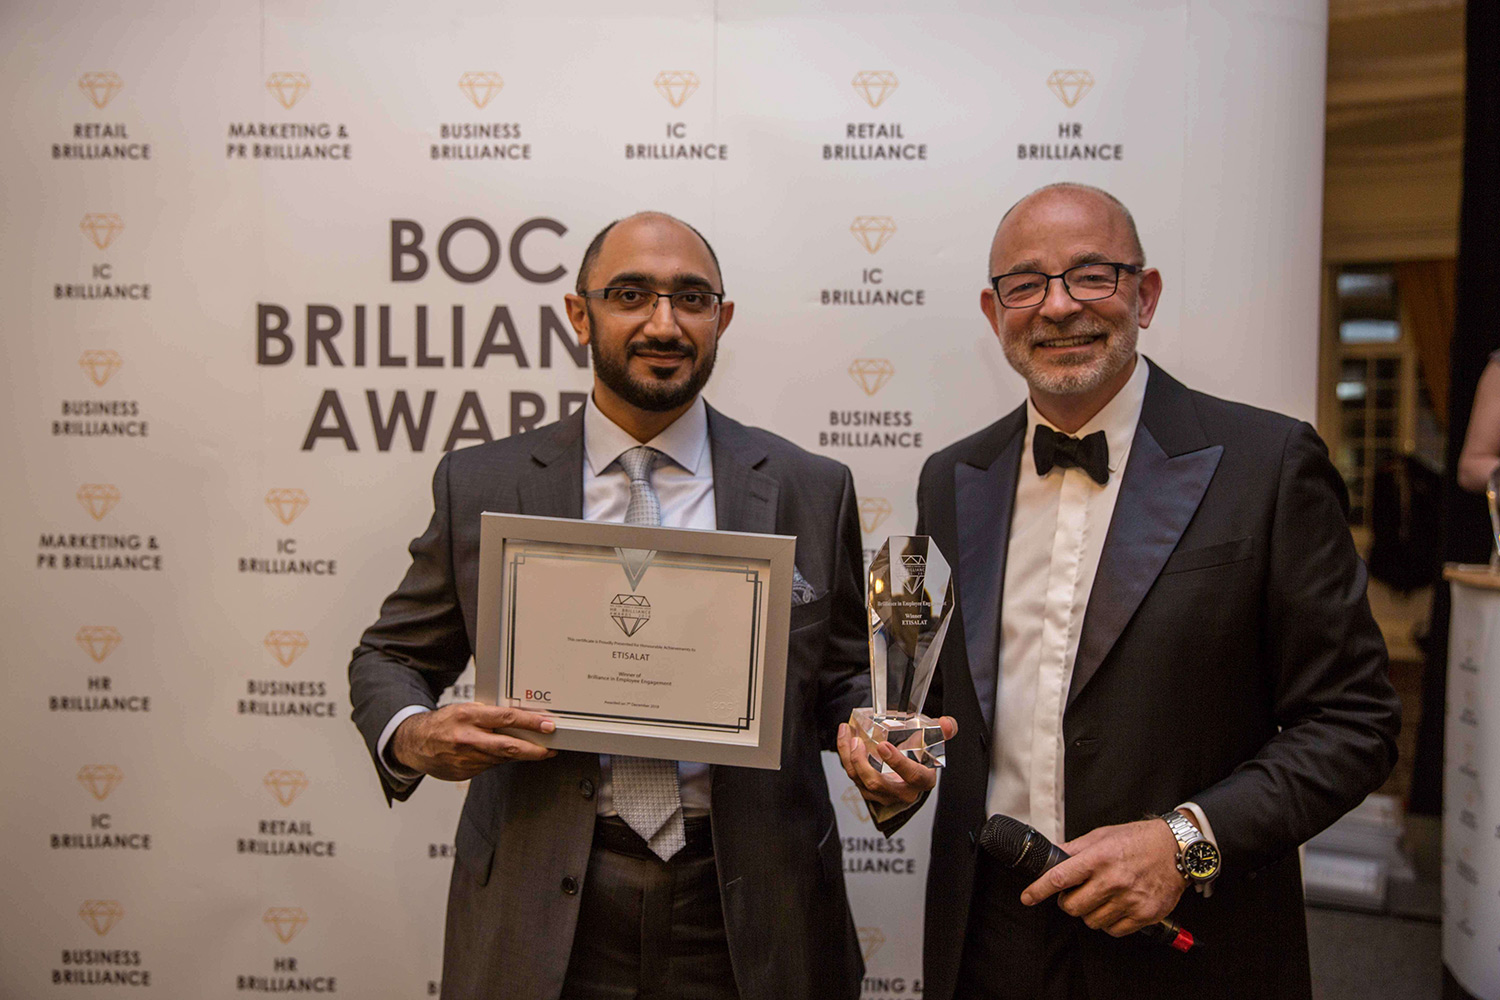 Etisalat - HR Brilliance Awards Winners